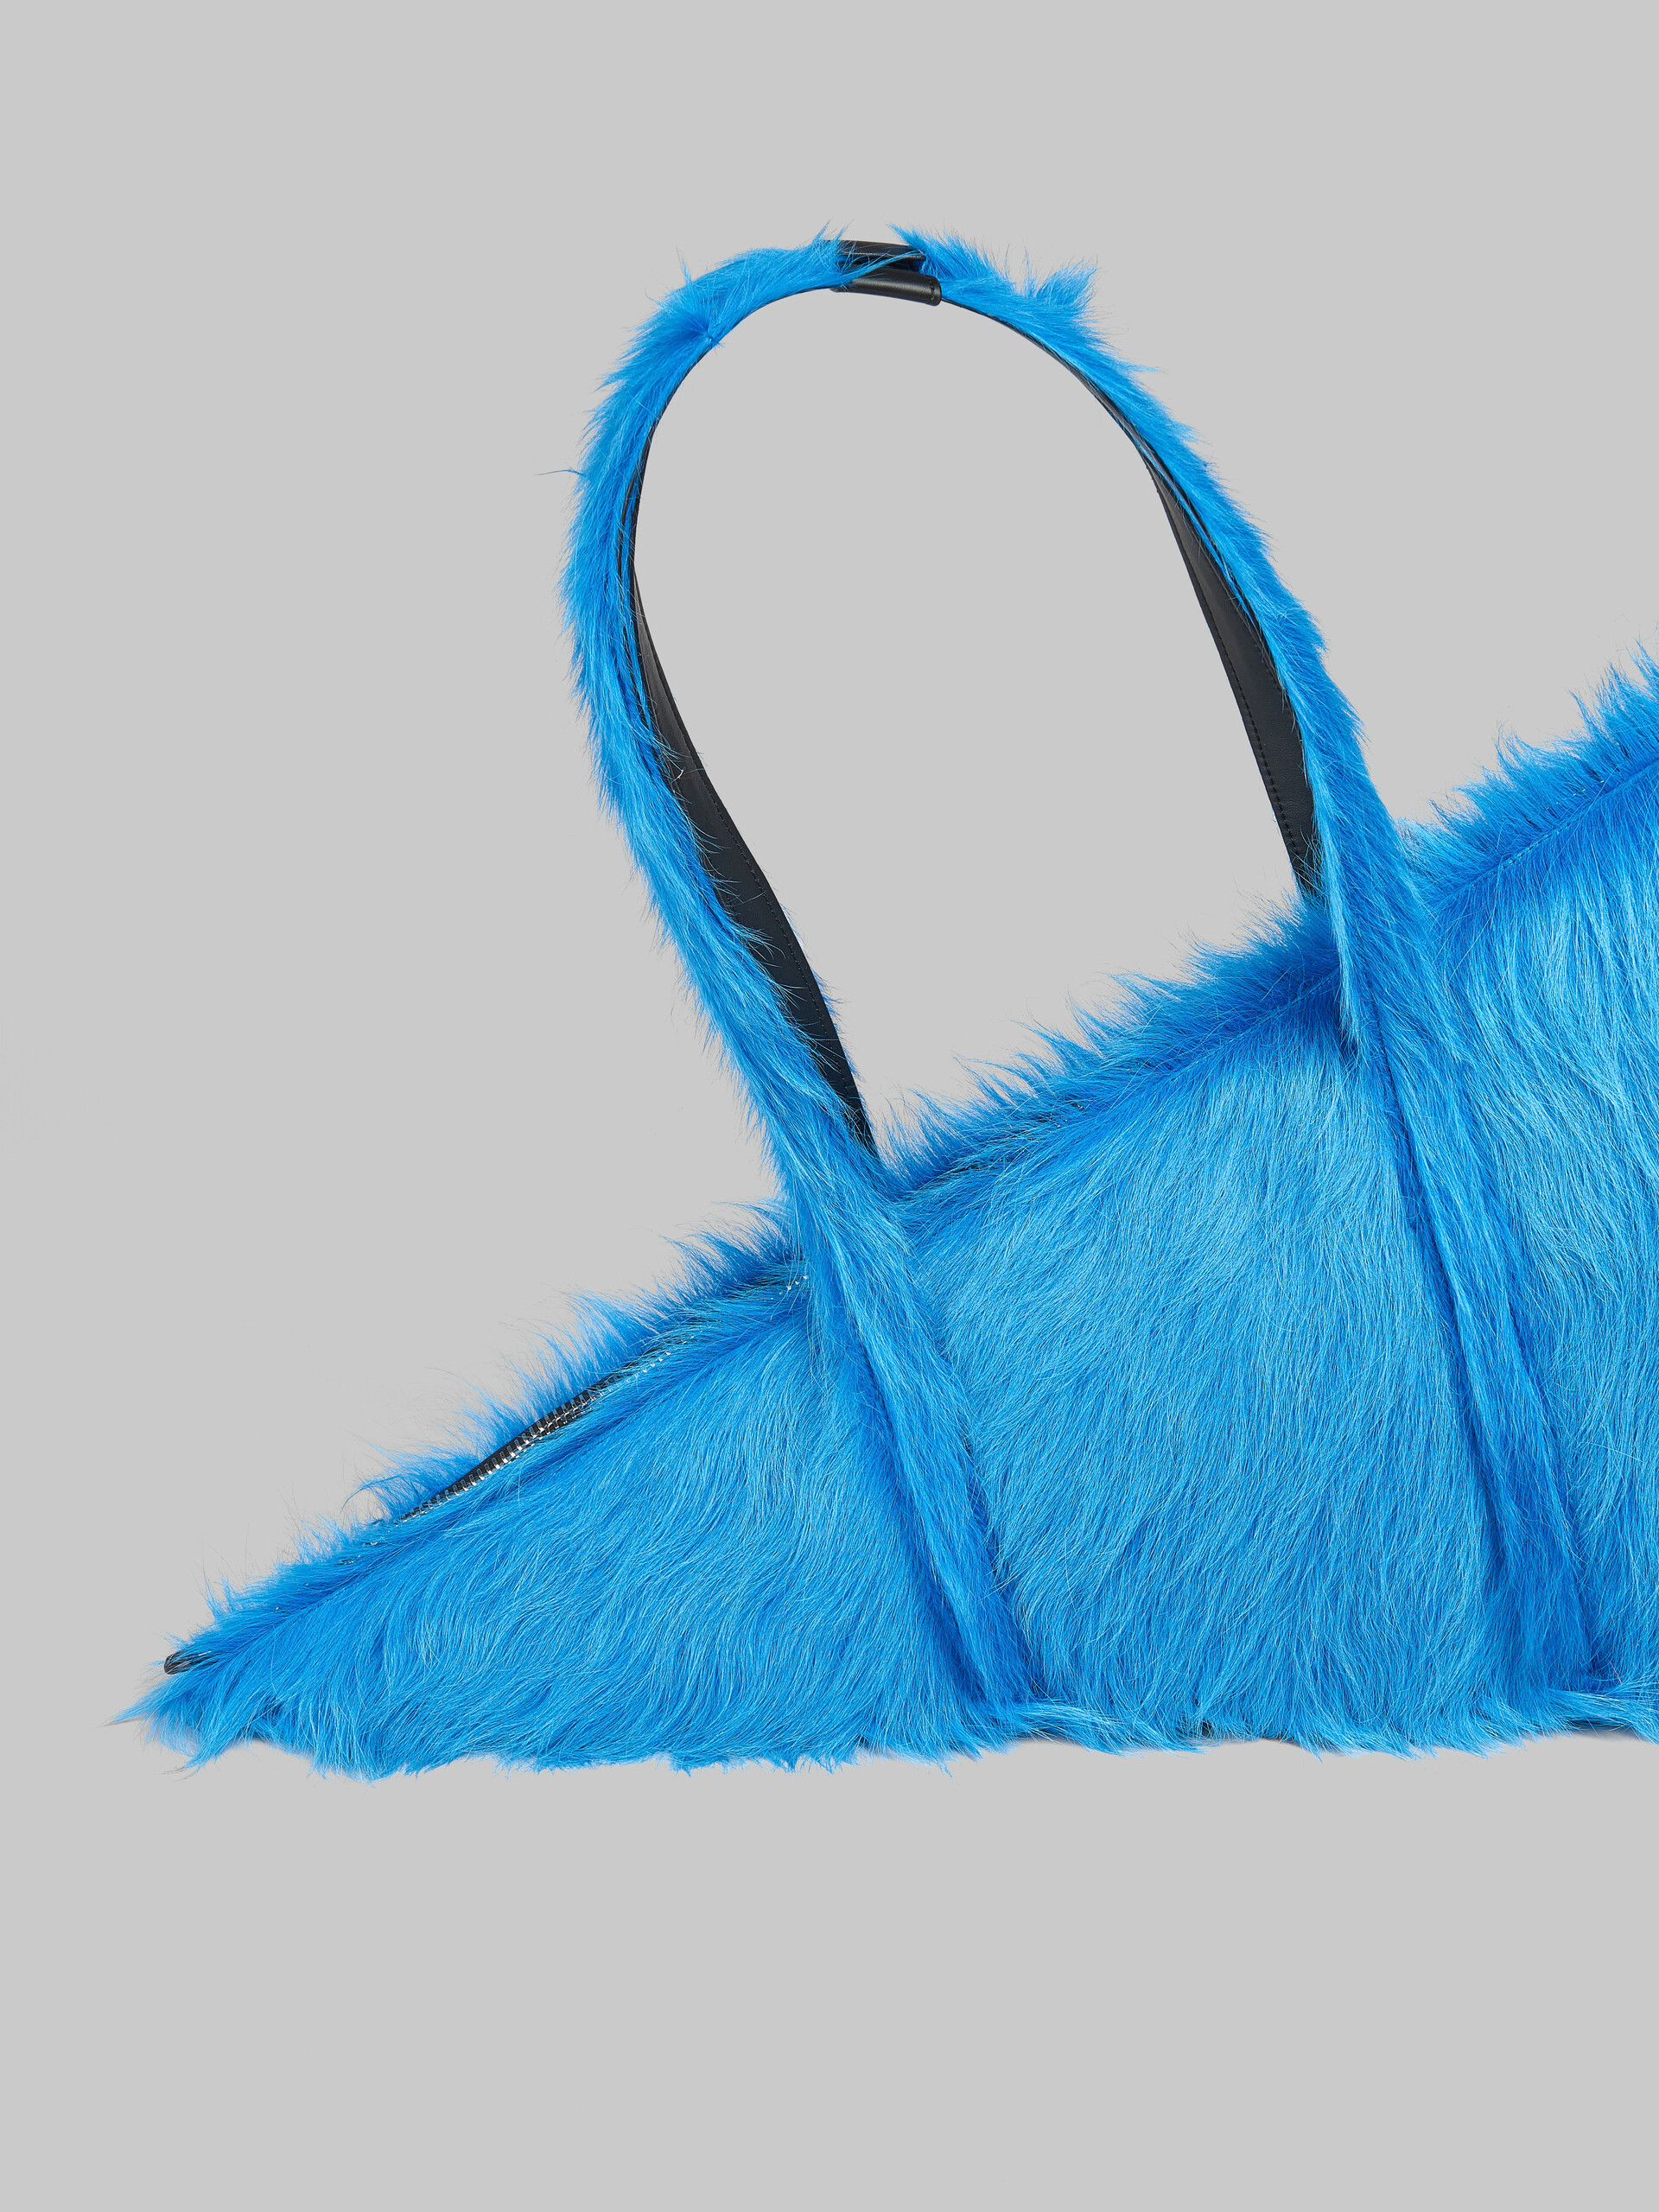 Dreieckige Duffle Bag Prisma aus Kalbsfell in Blau - Reisetasche - Image 5